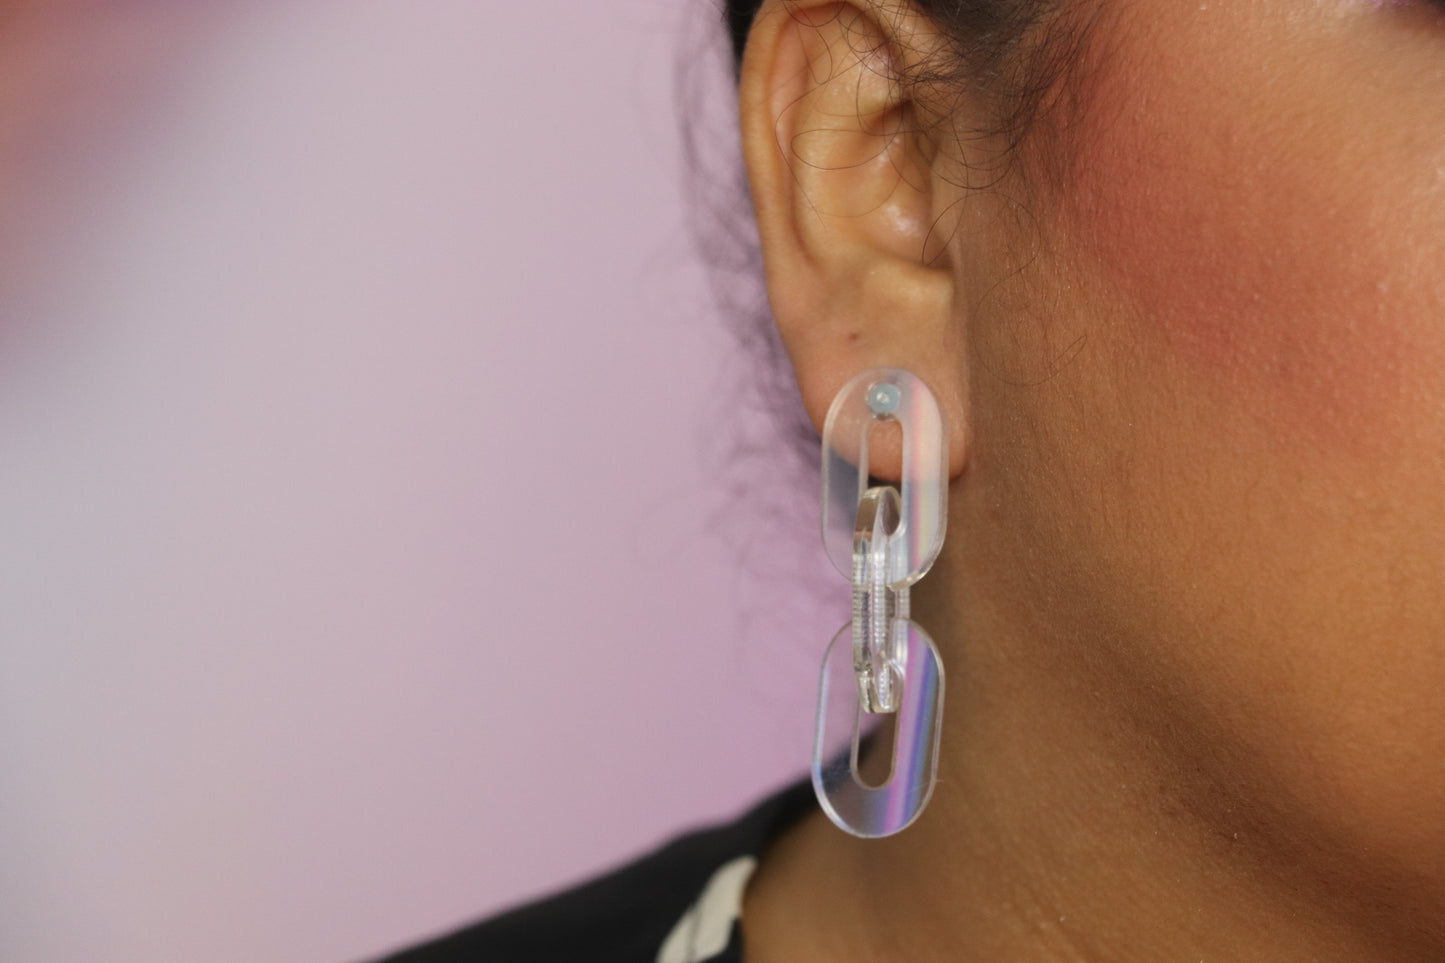 CD iridescent chain Earrings